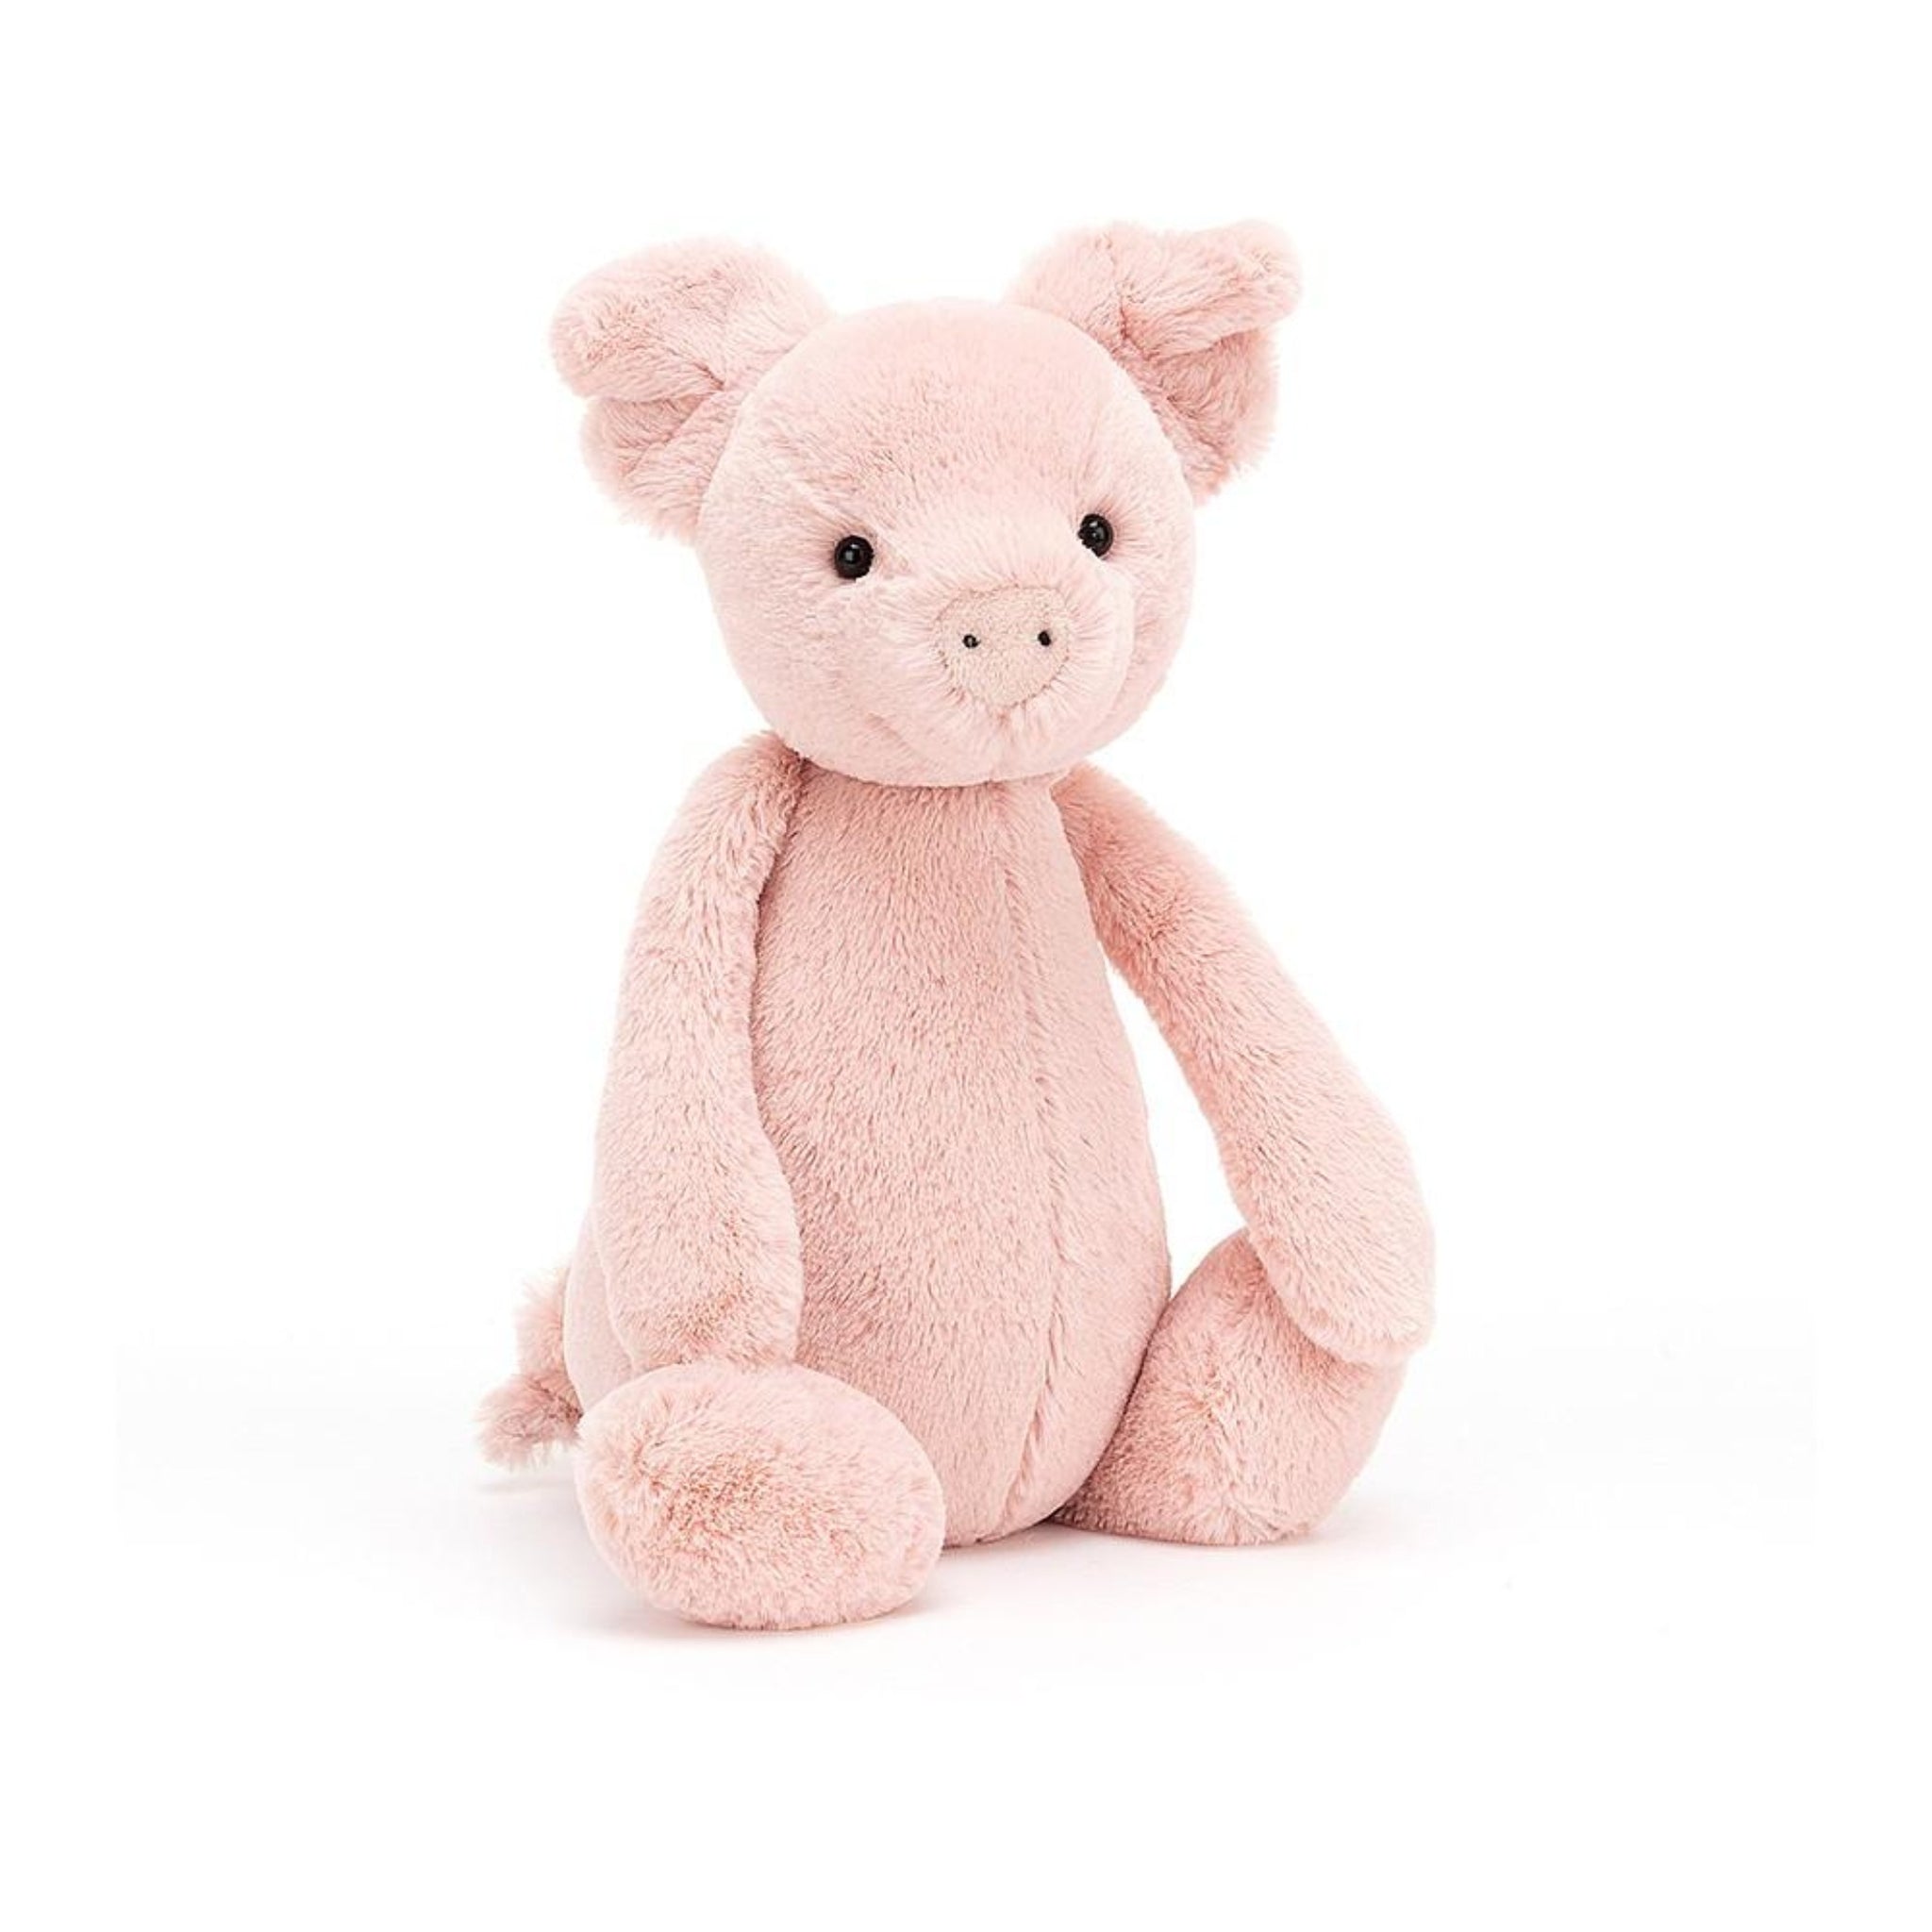 JellyCat medium pink pig plush toy